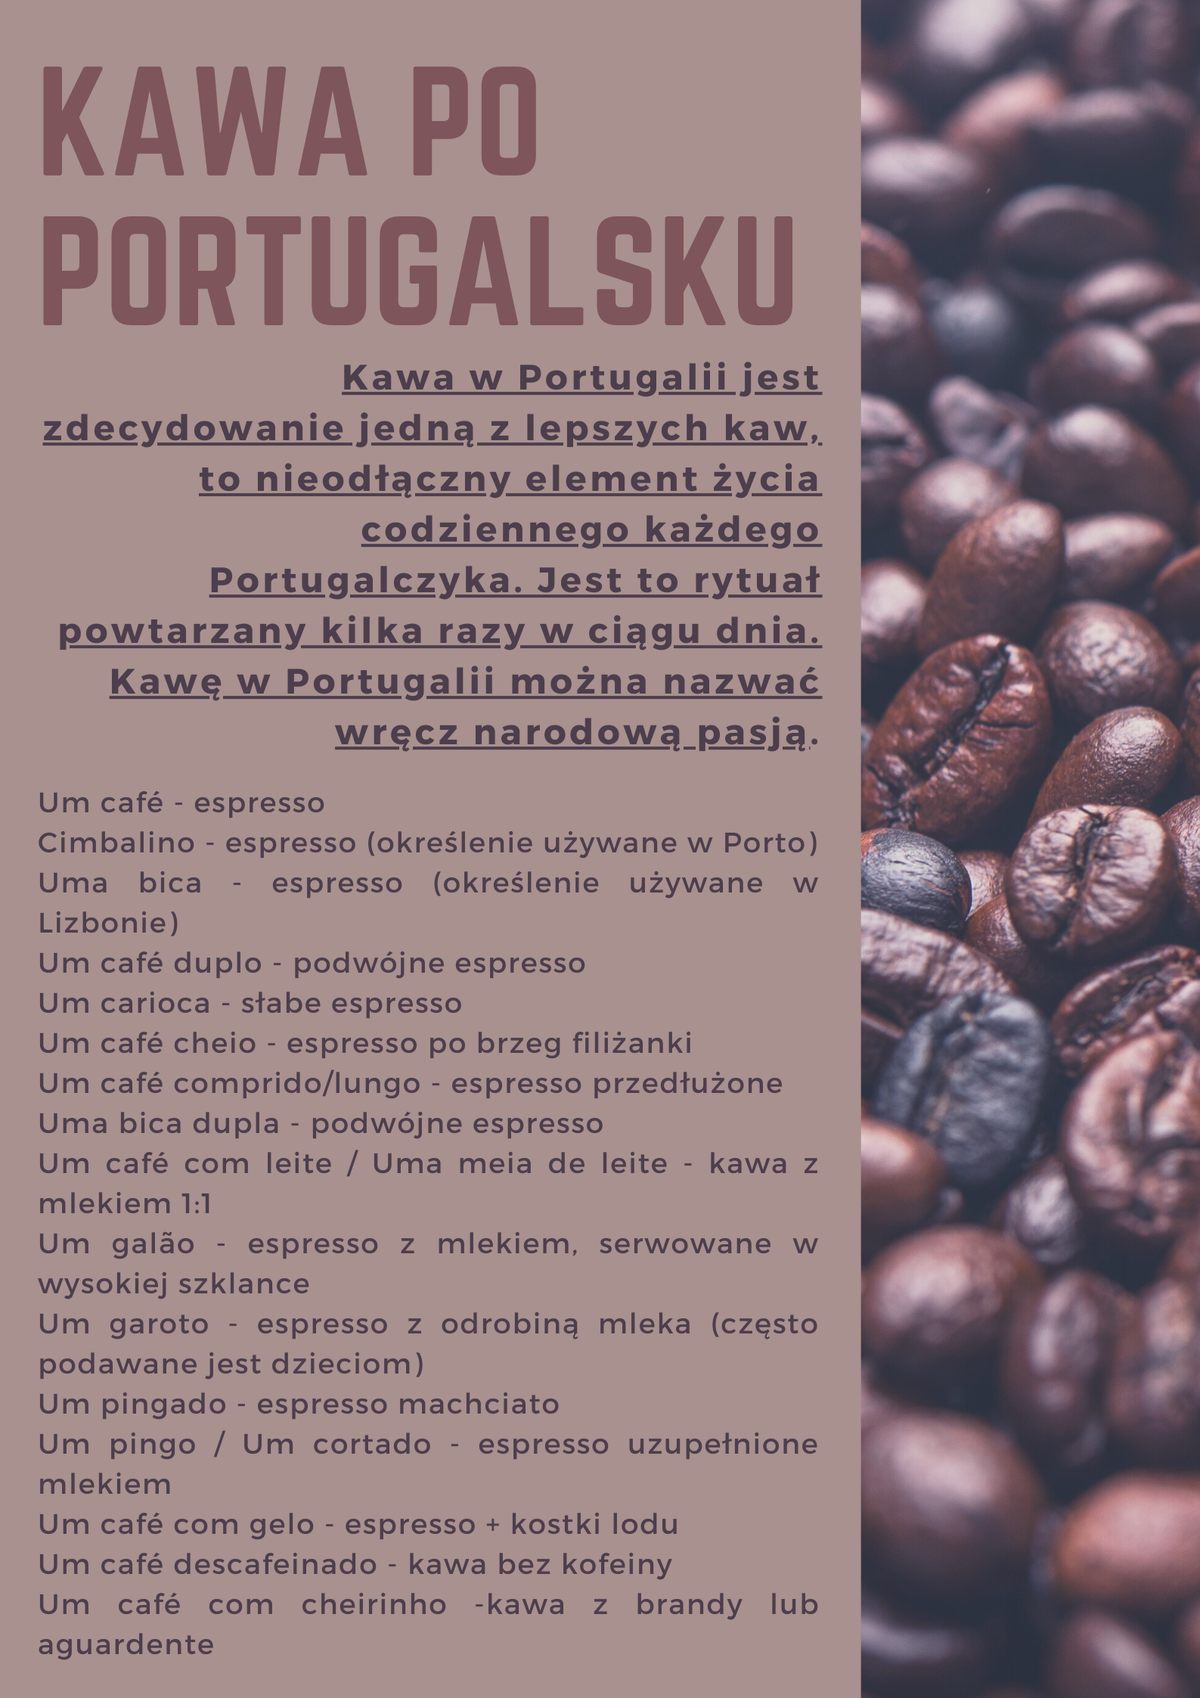 Kawa po portugalsku